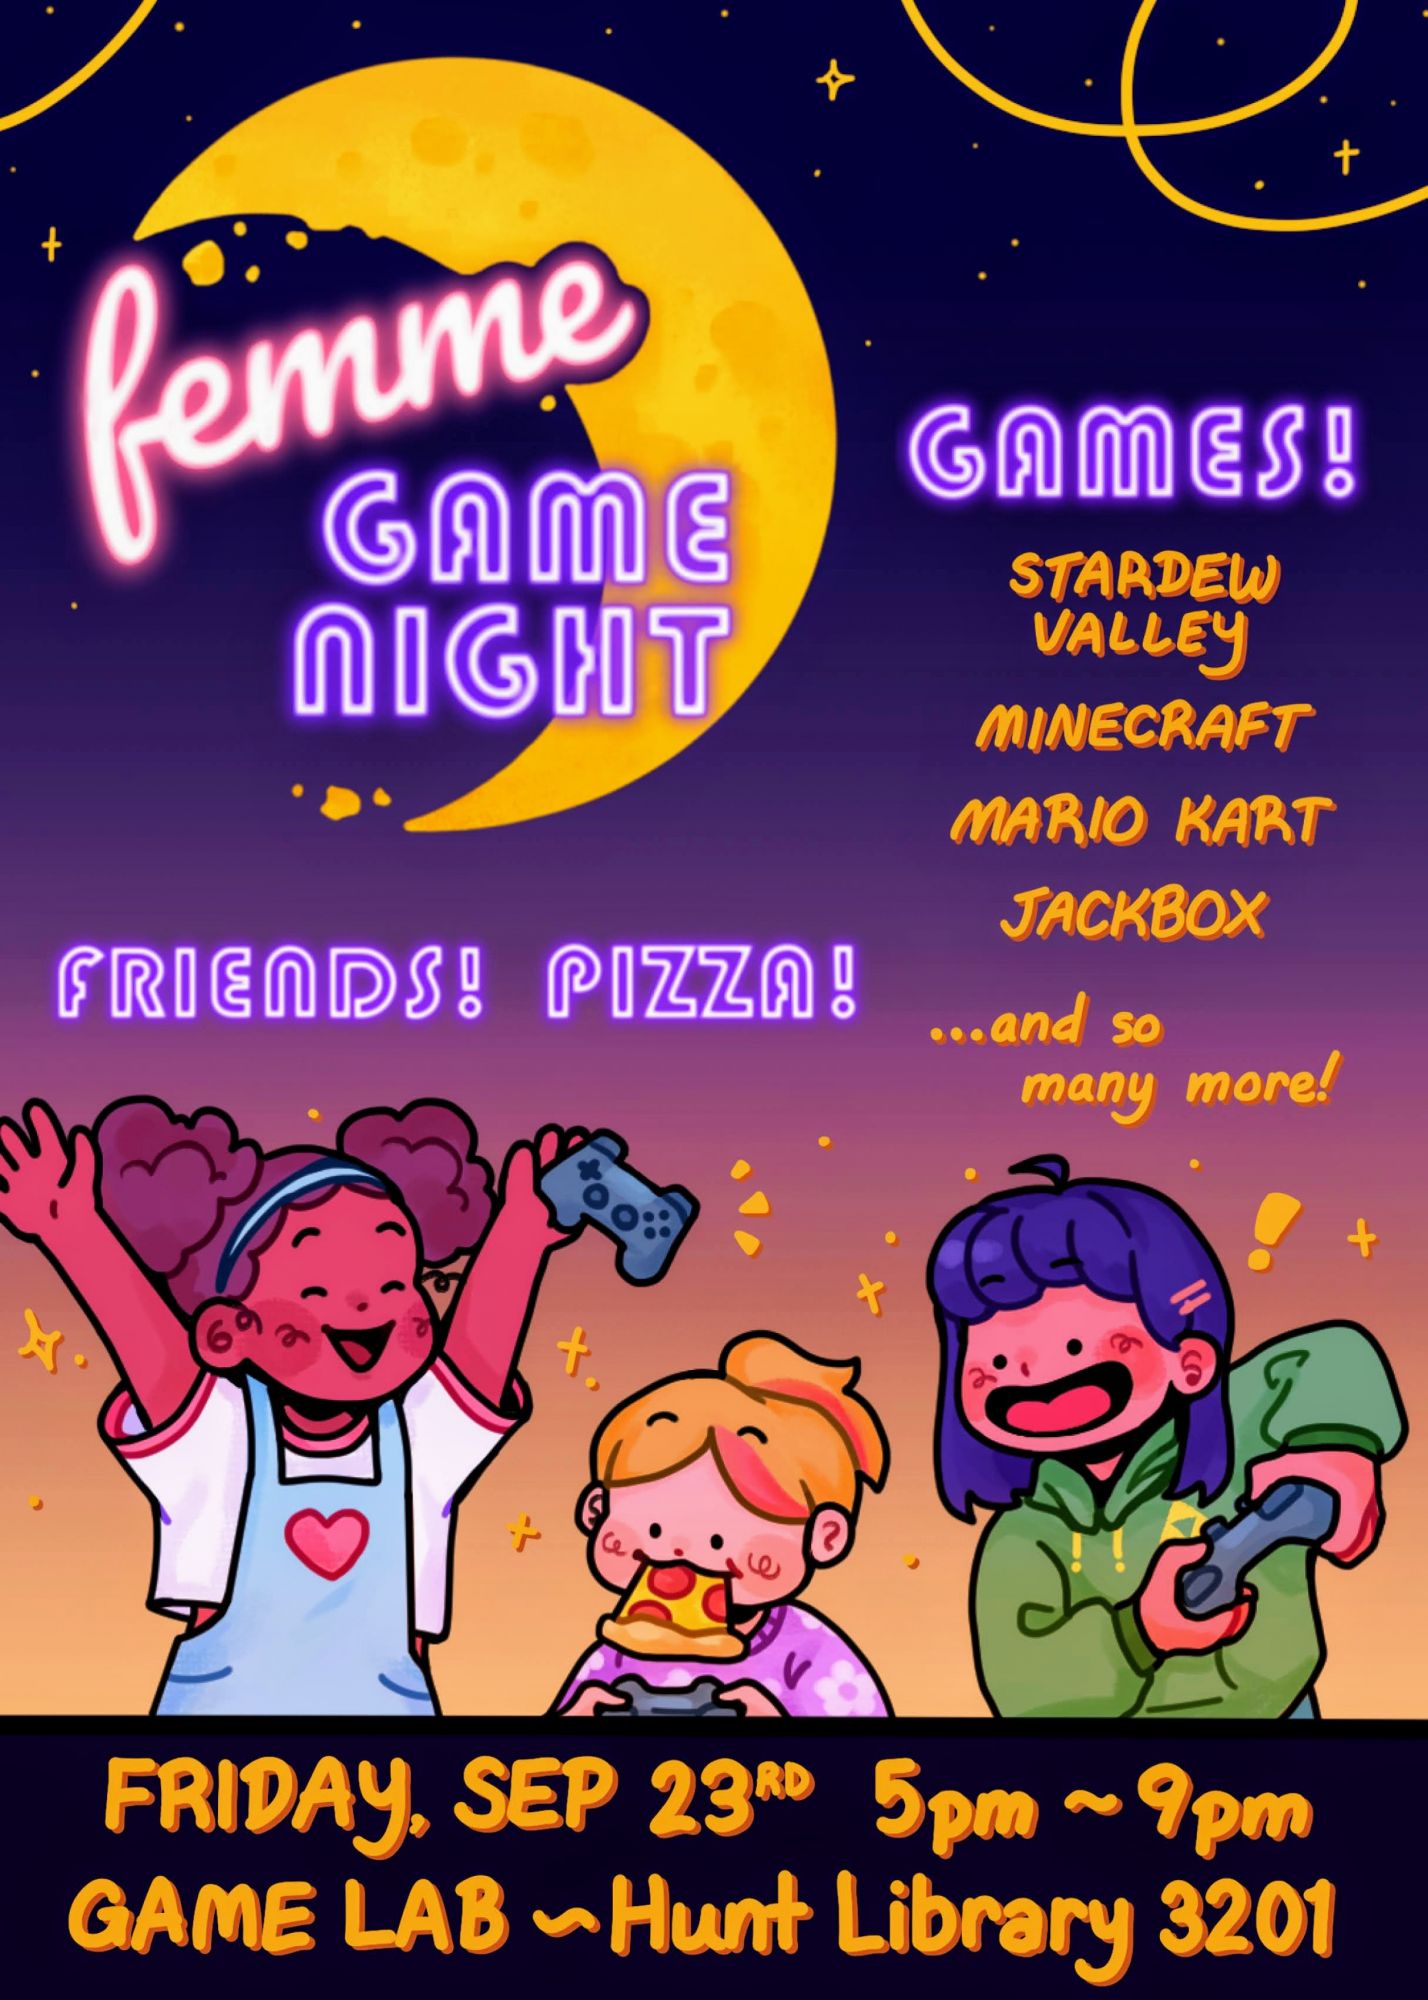 Femme Game night 